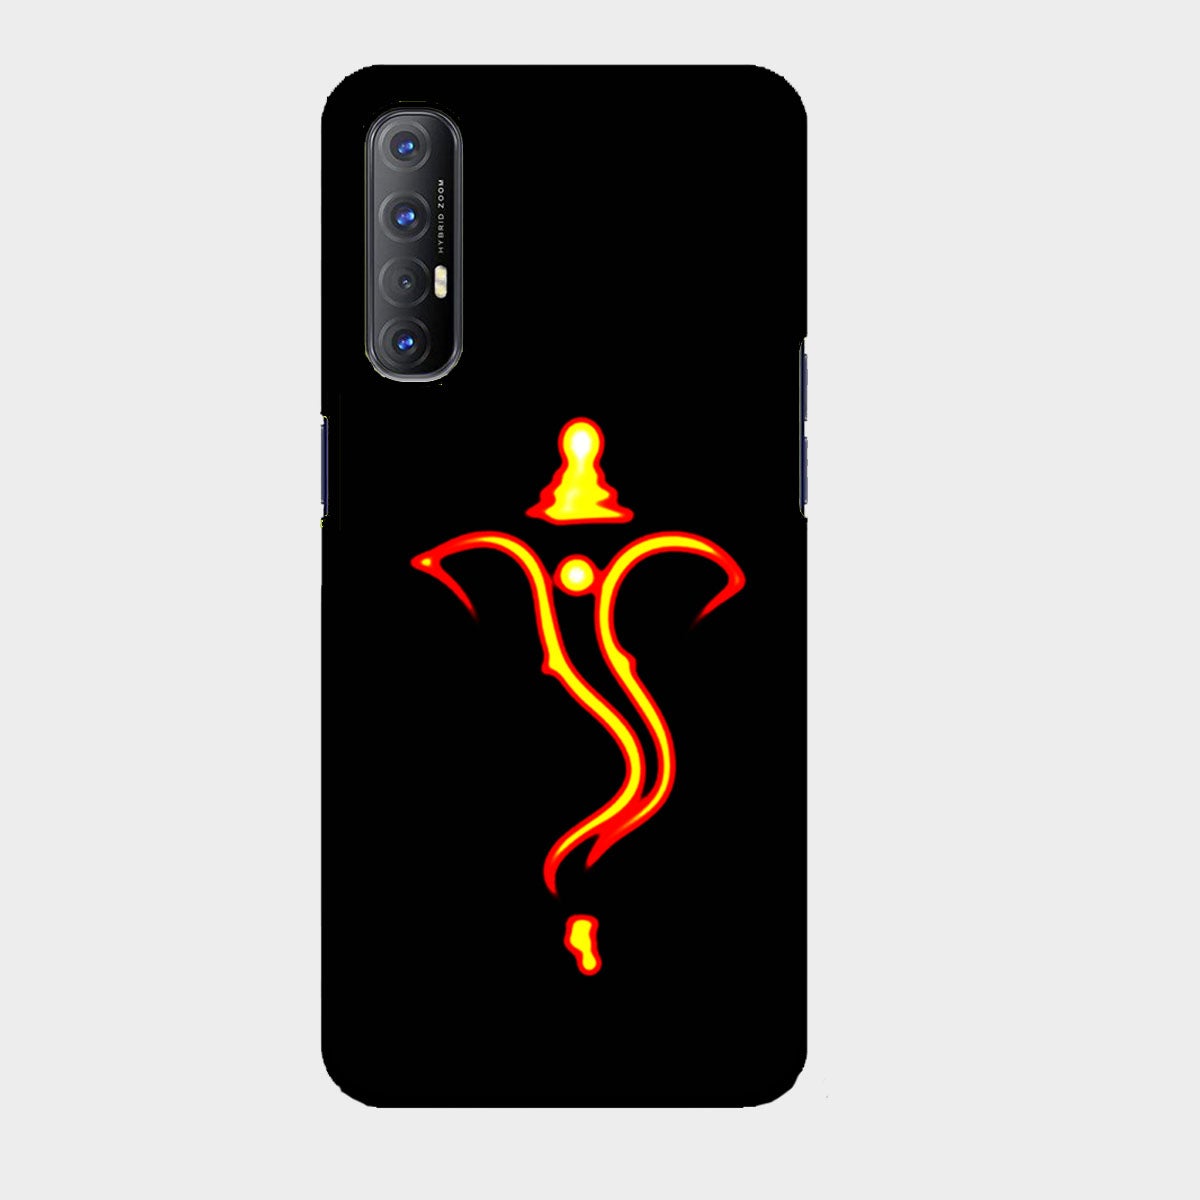 Ganesh - Mobile Phone Cover - Hard Case